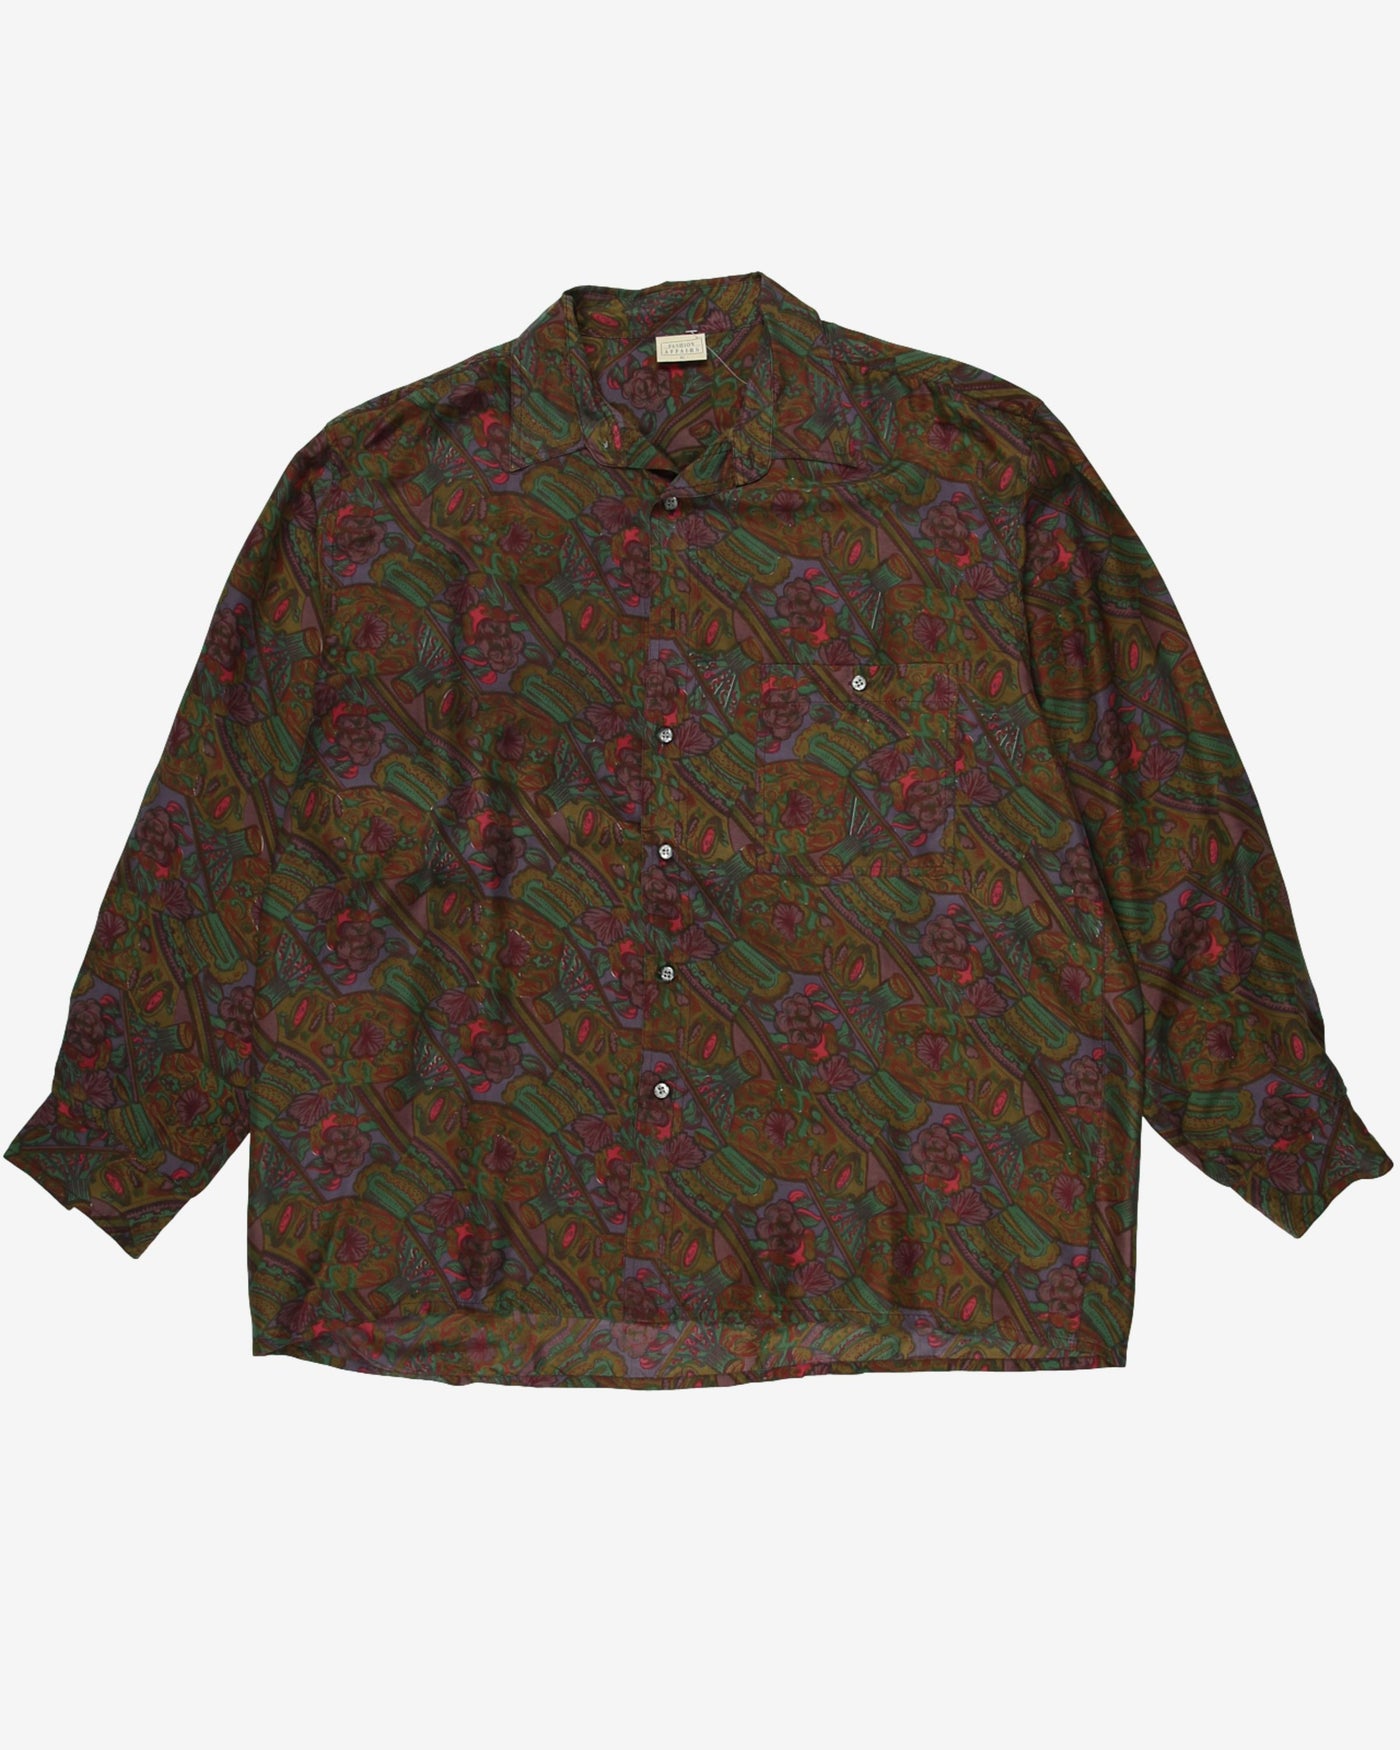 Vintage Fashion Affairs Silk Patterned Button Up Shirt - XL